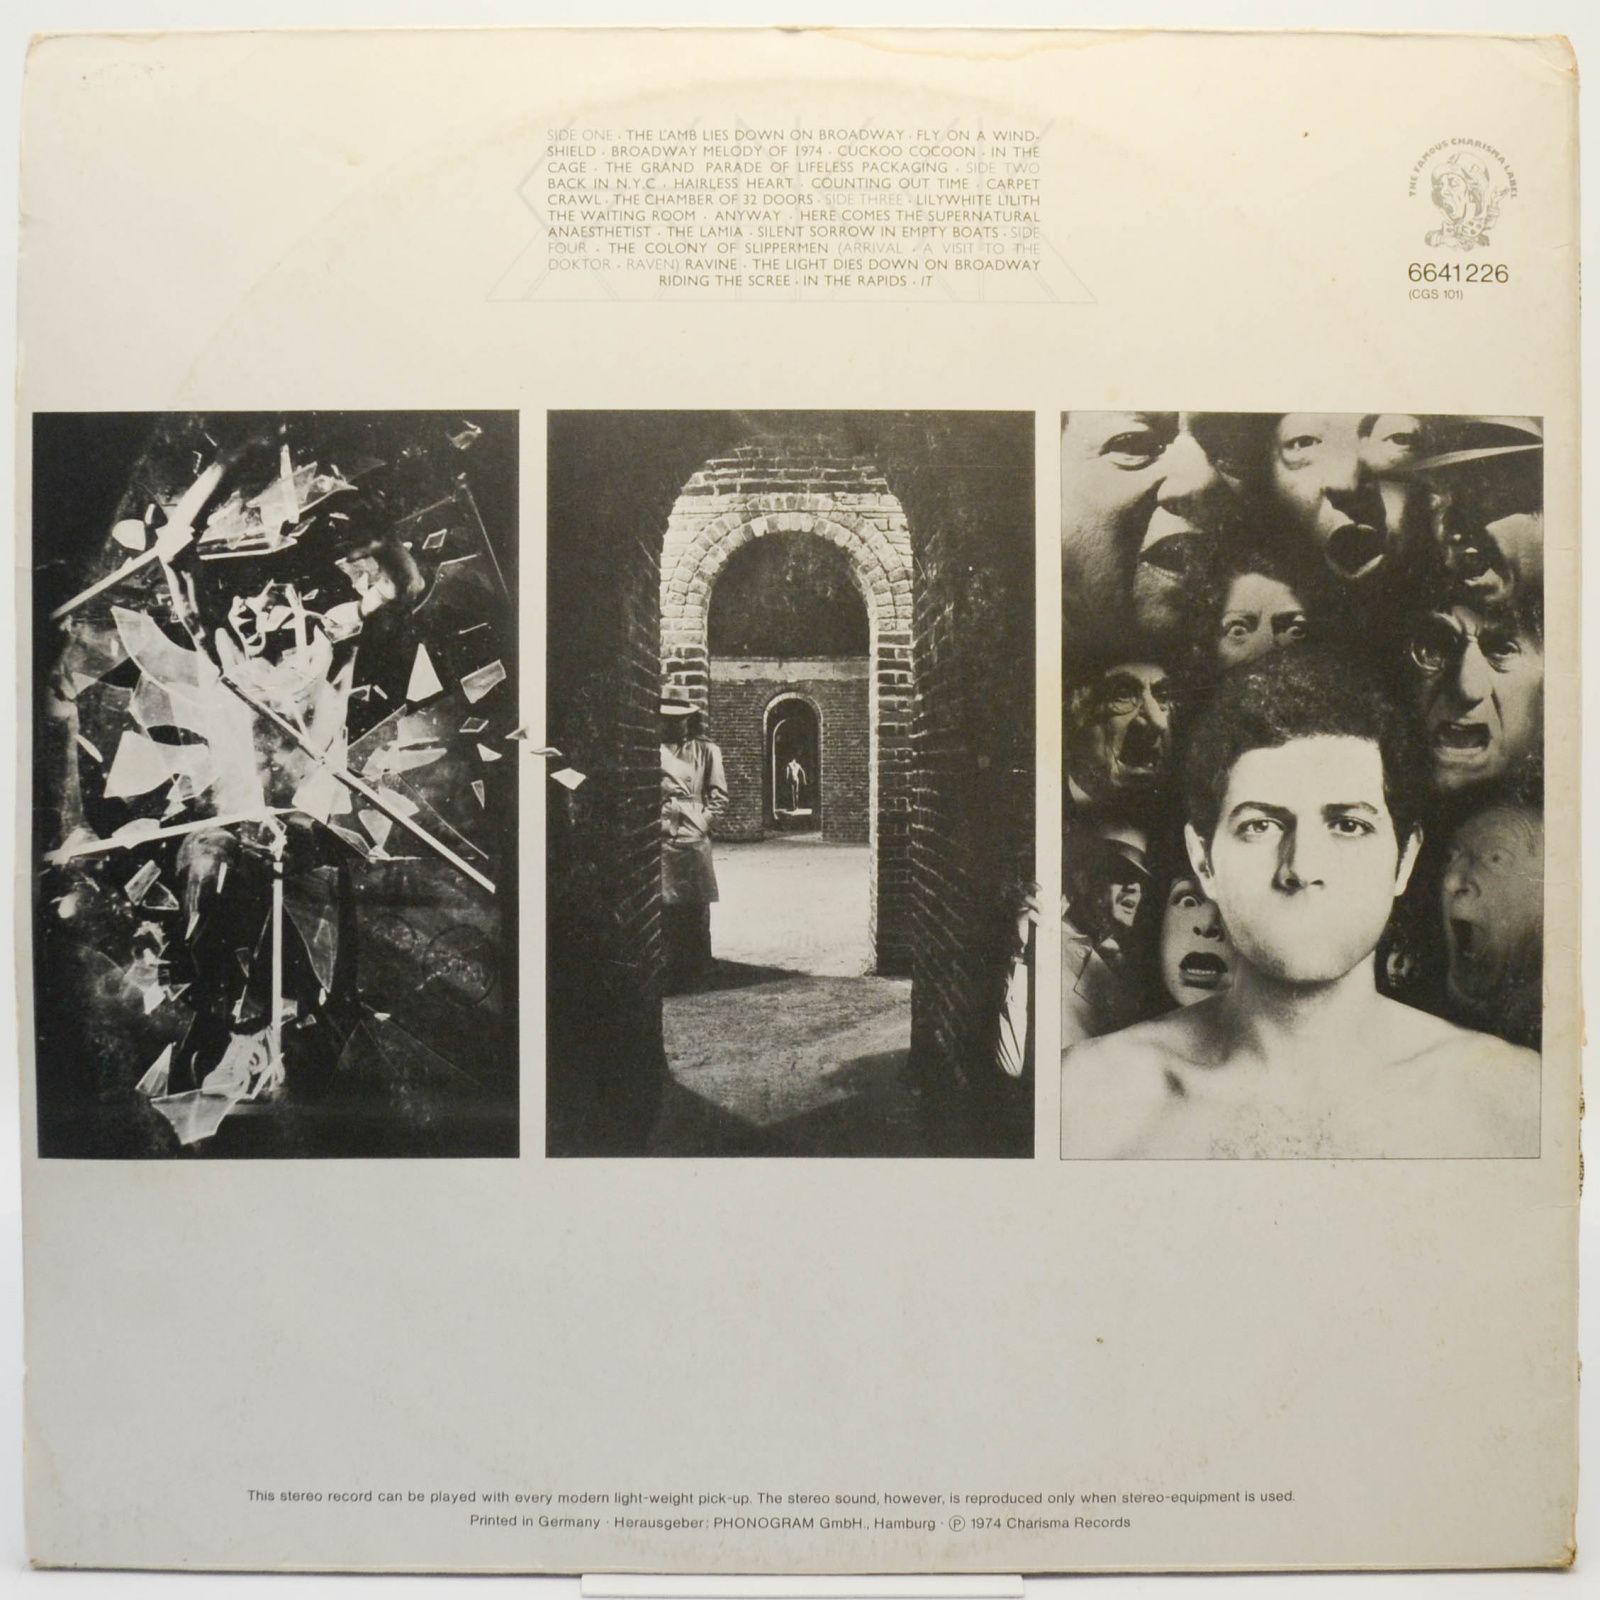 Genesis — The Lamb Lies Down On Broadway (2LP), 1974